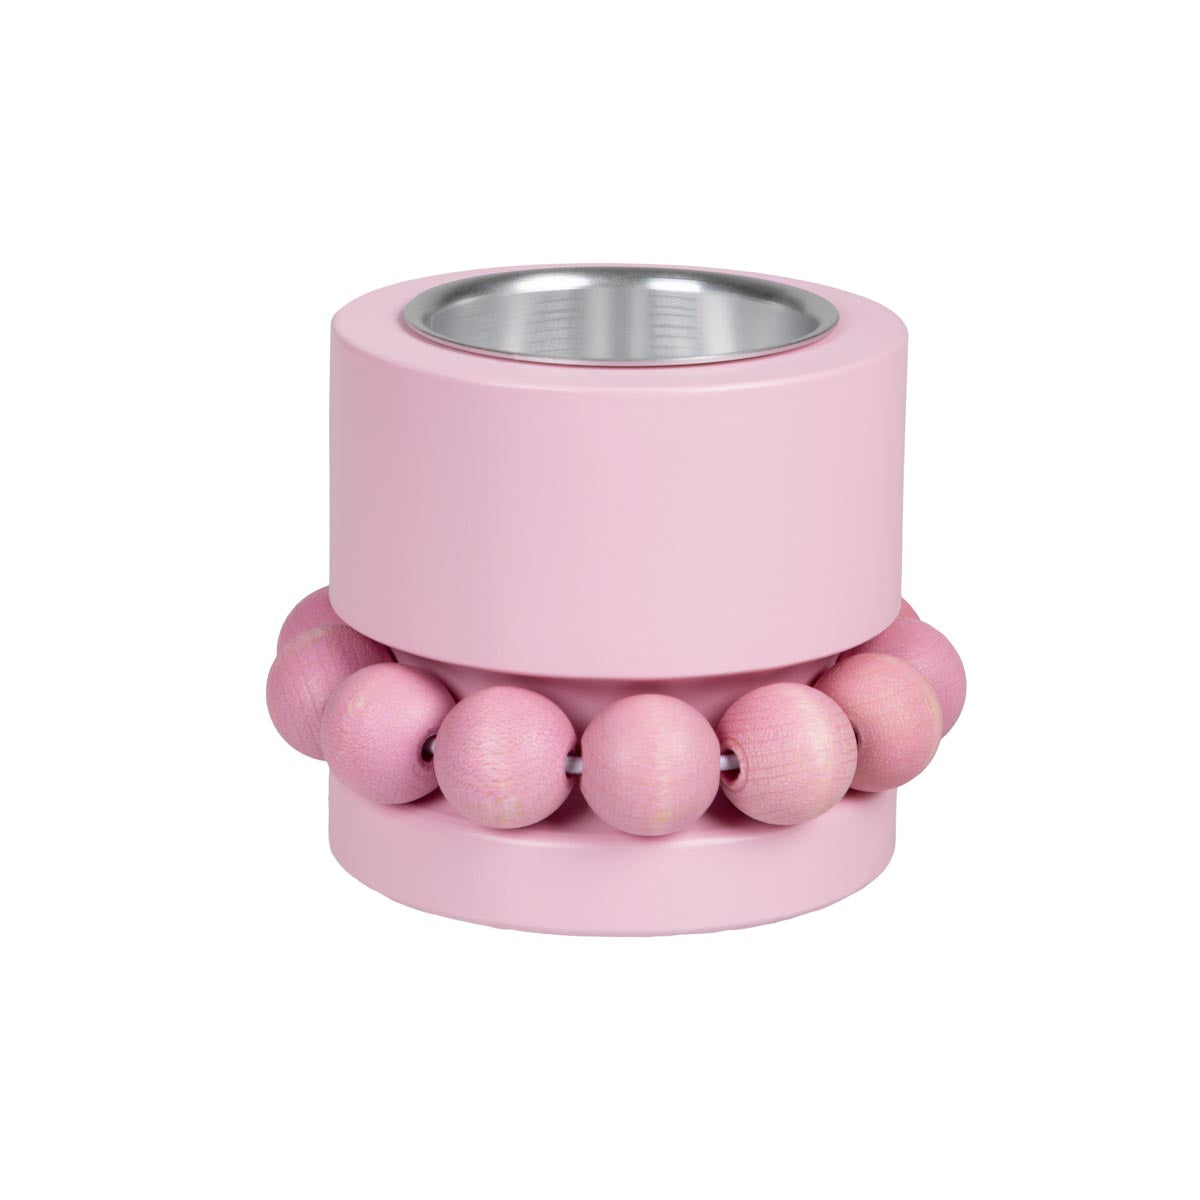 Prinsessa candleholder, light pink